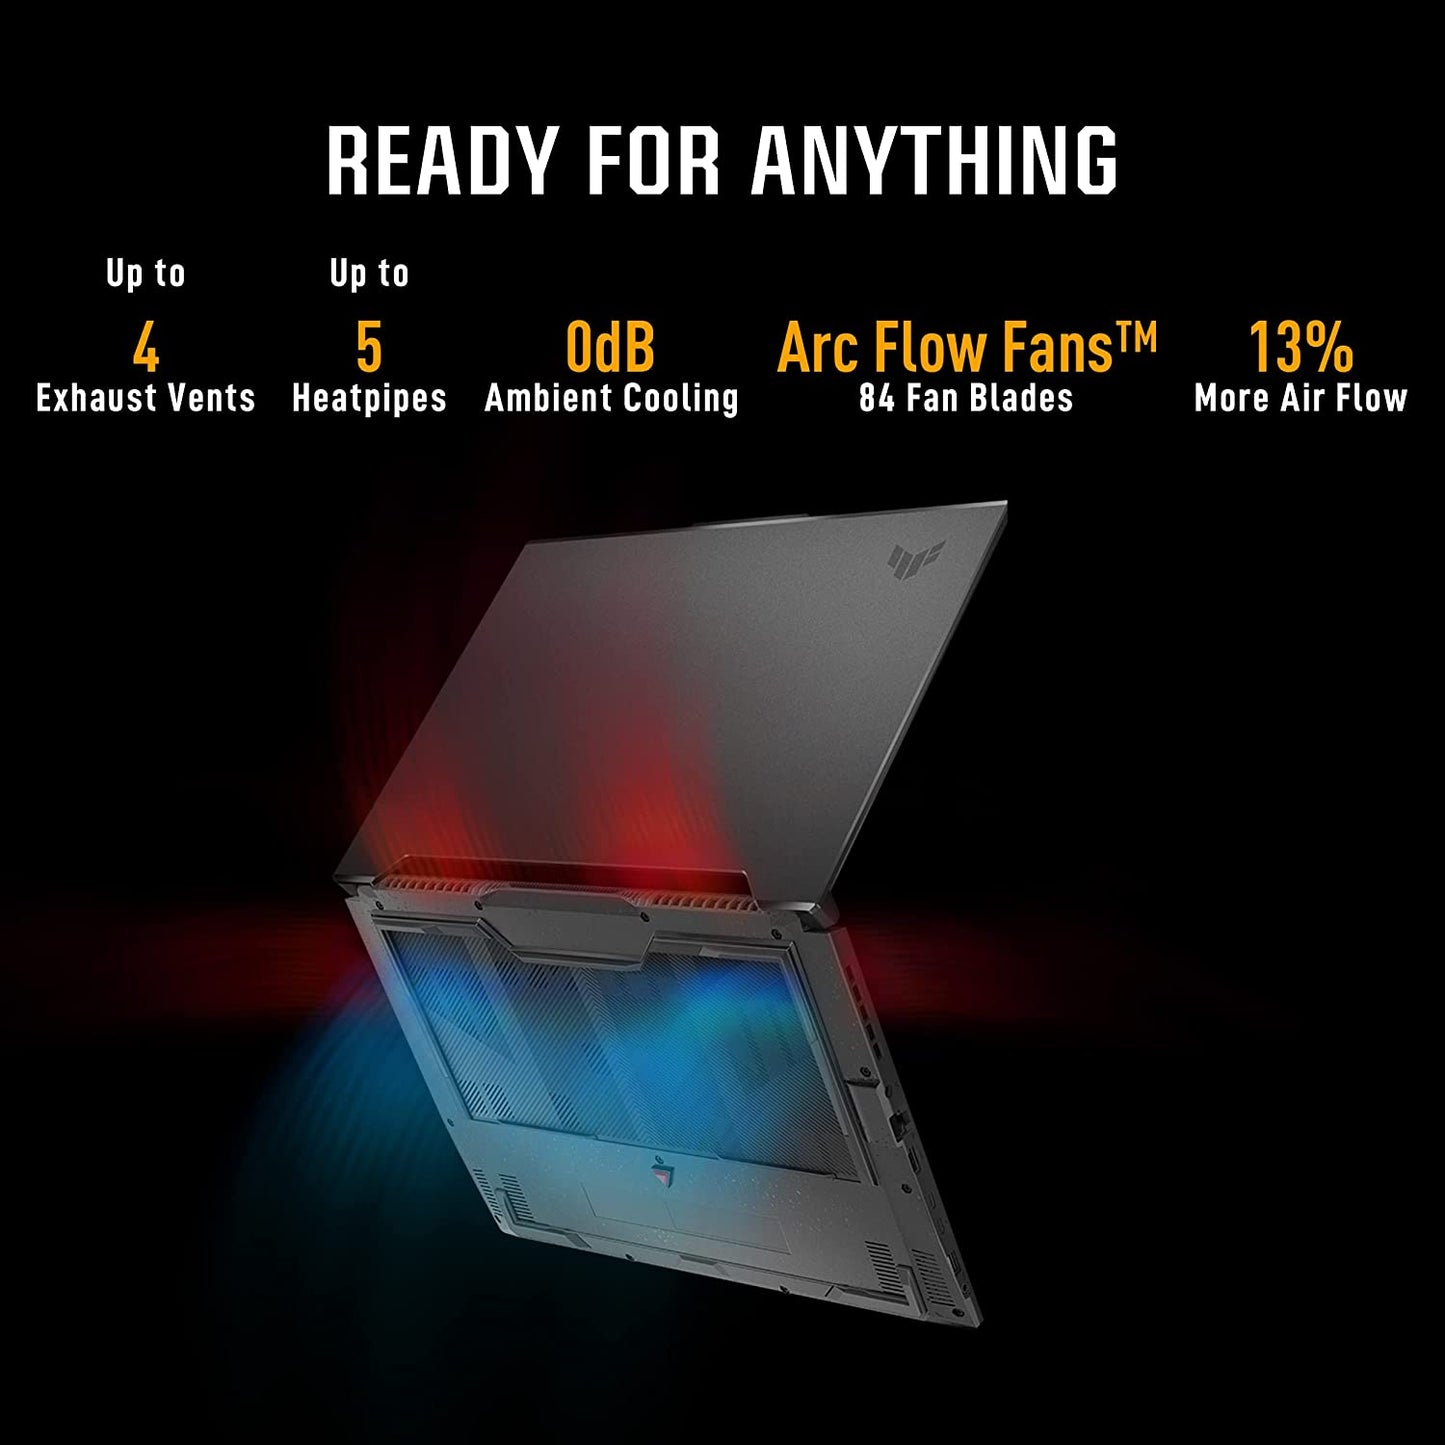 Asus TD15 i7 (Intel Core i7, Nvidia RTX 3060)